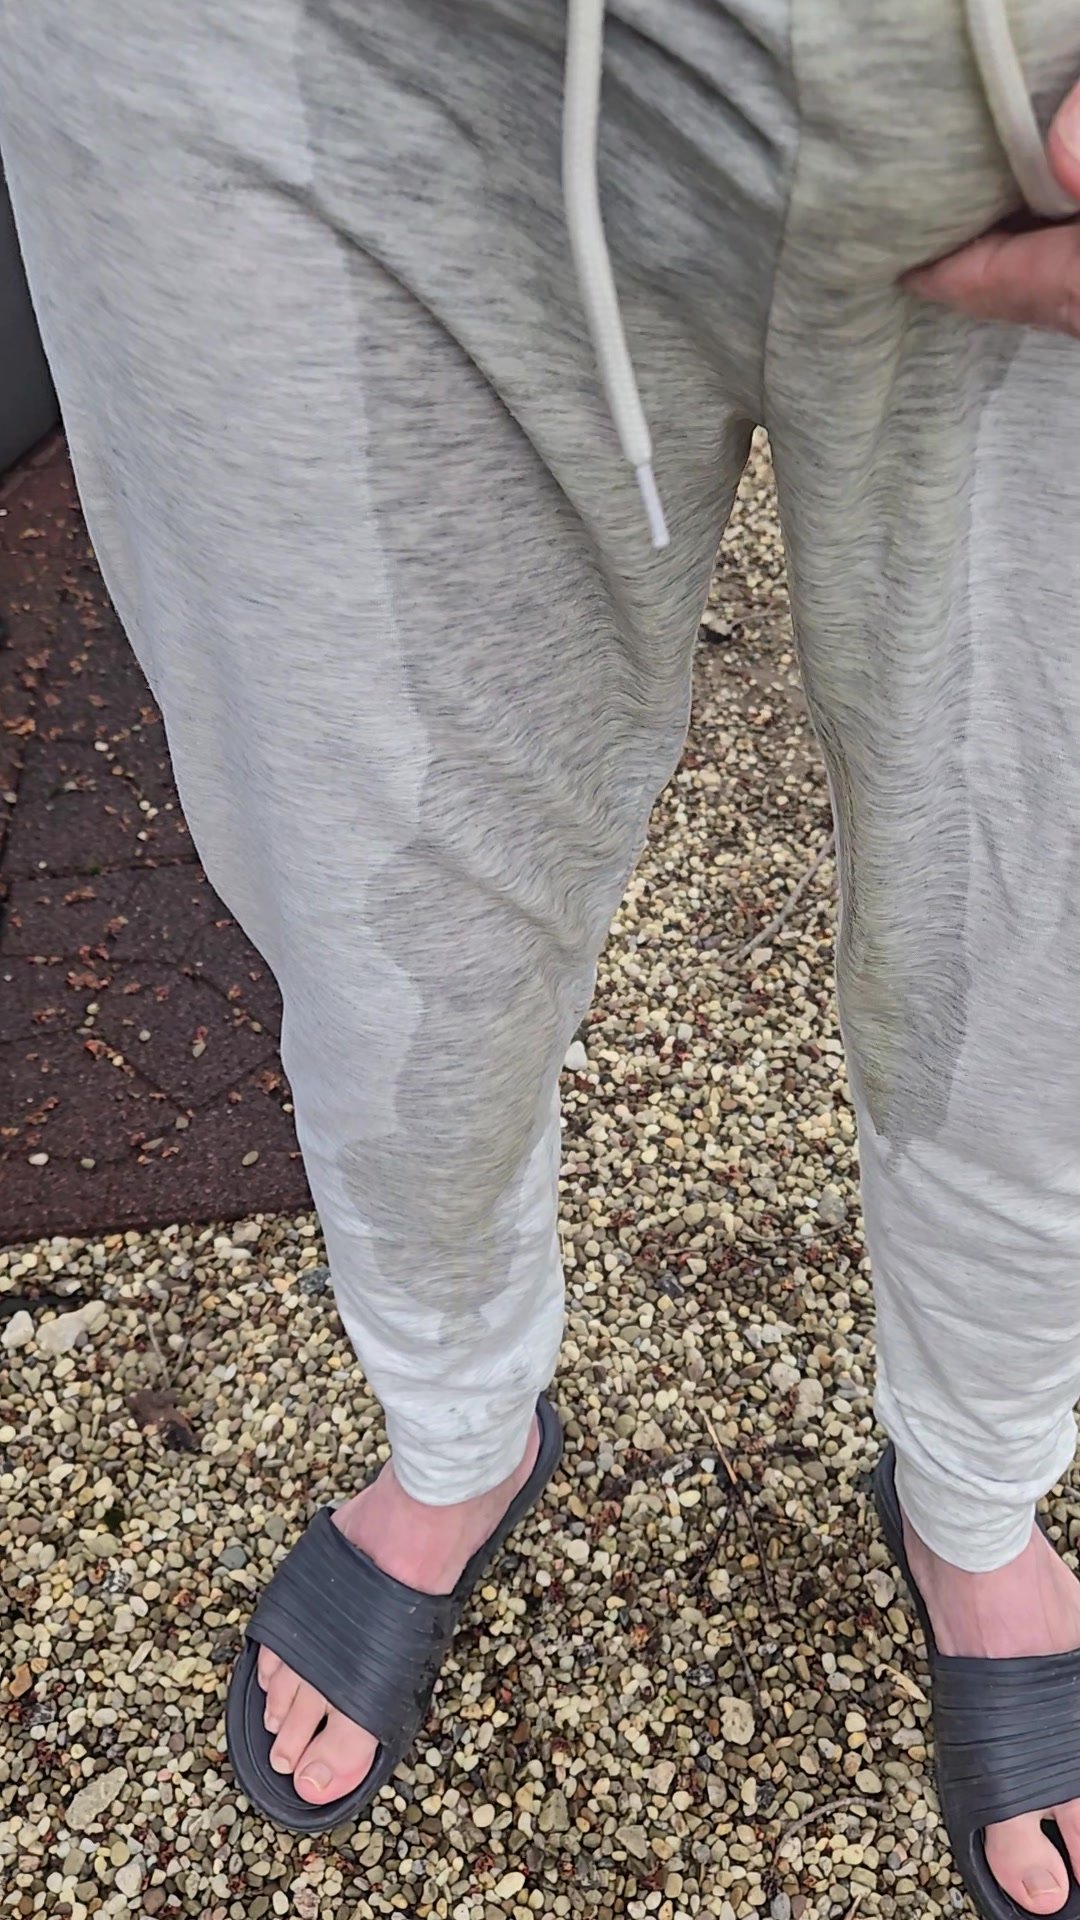 Grey pants wetting outside